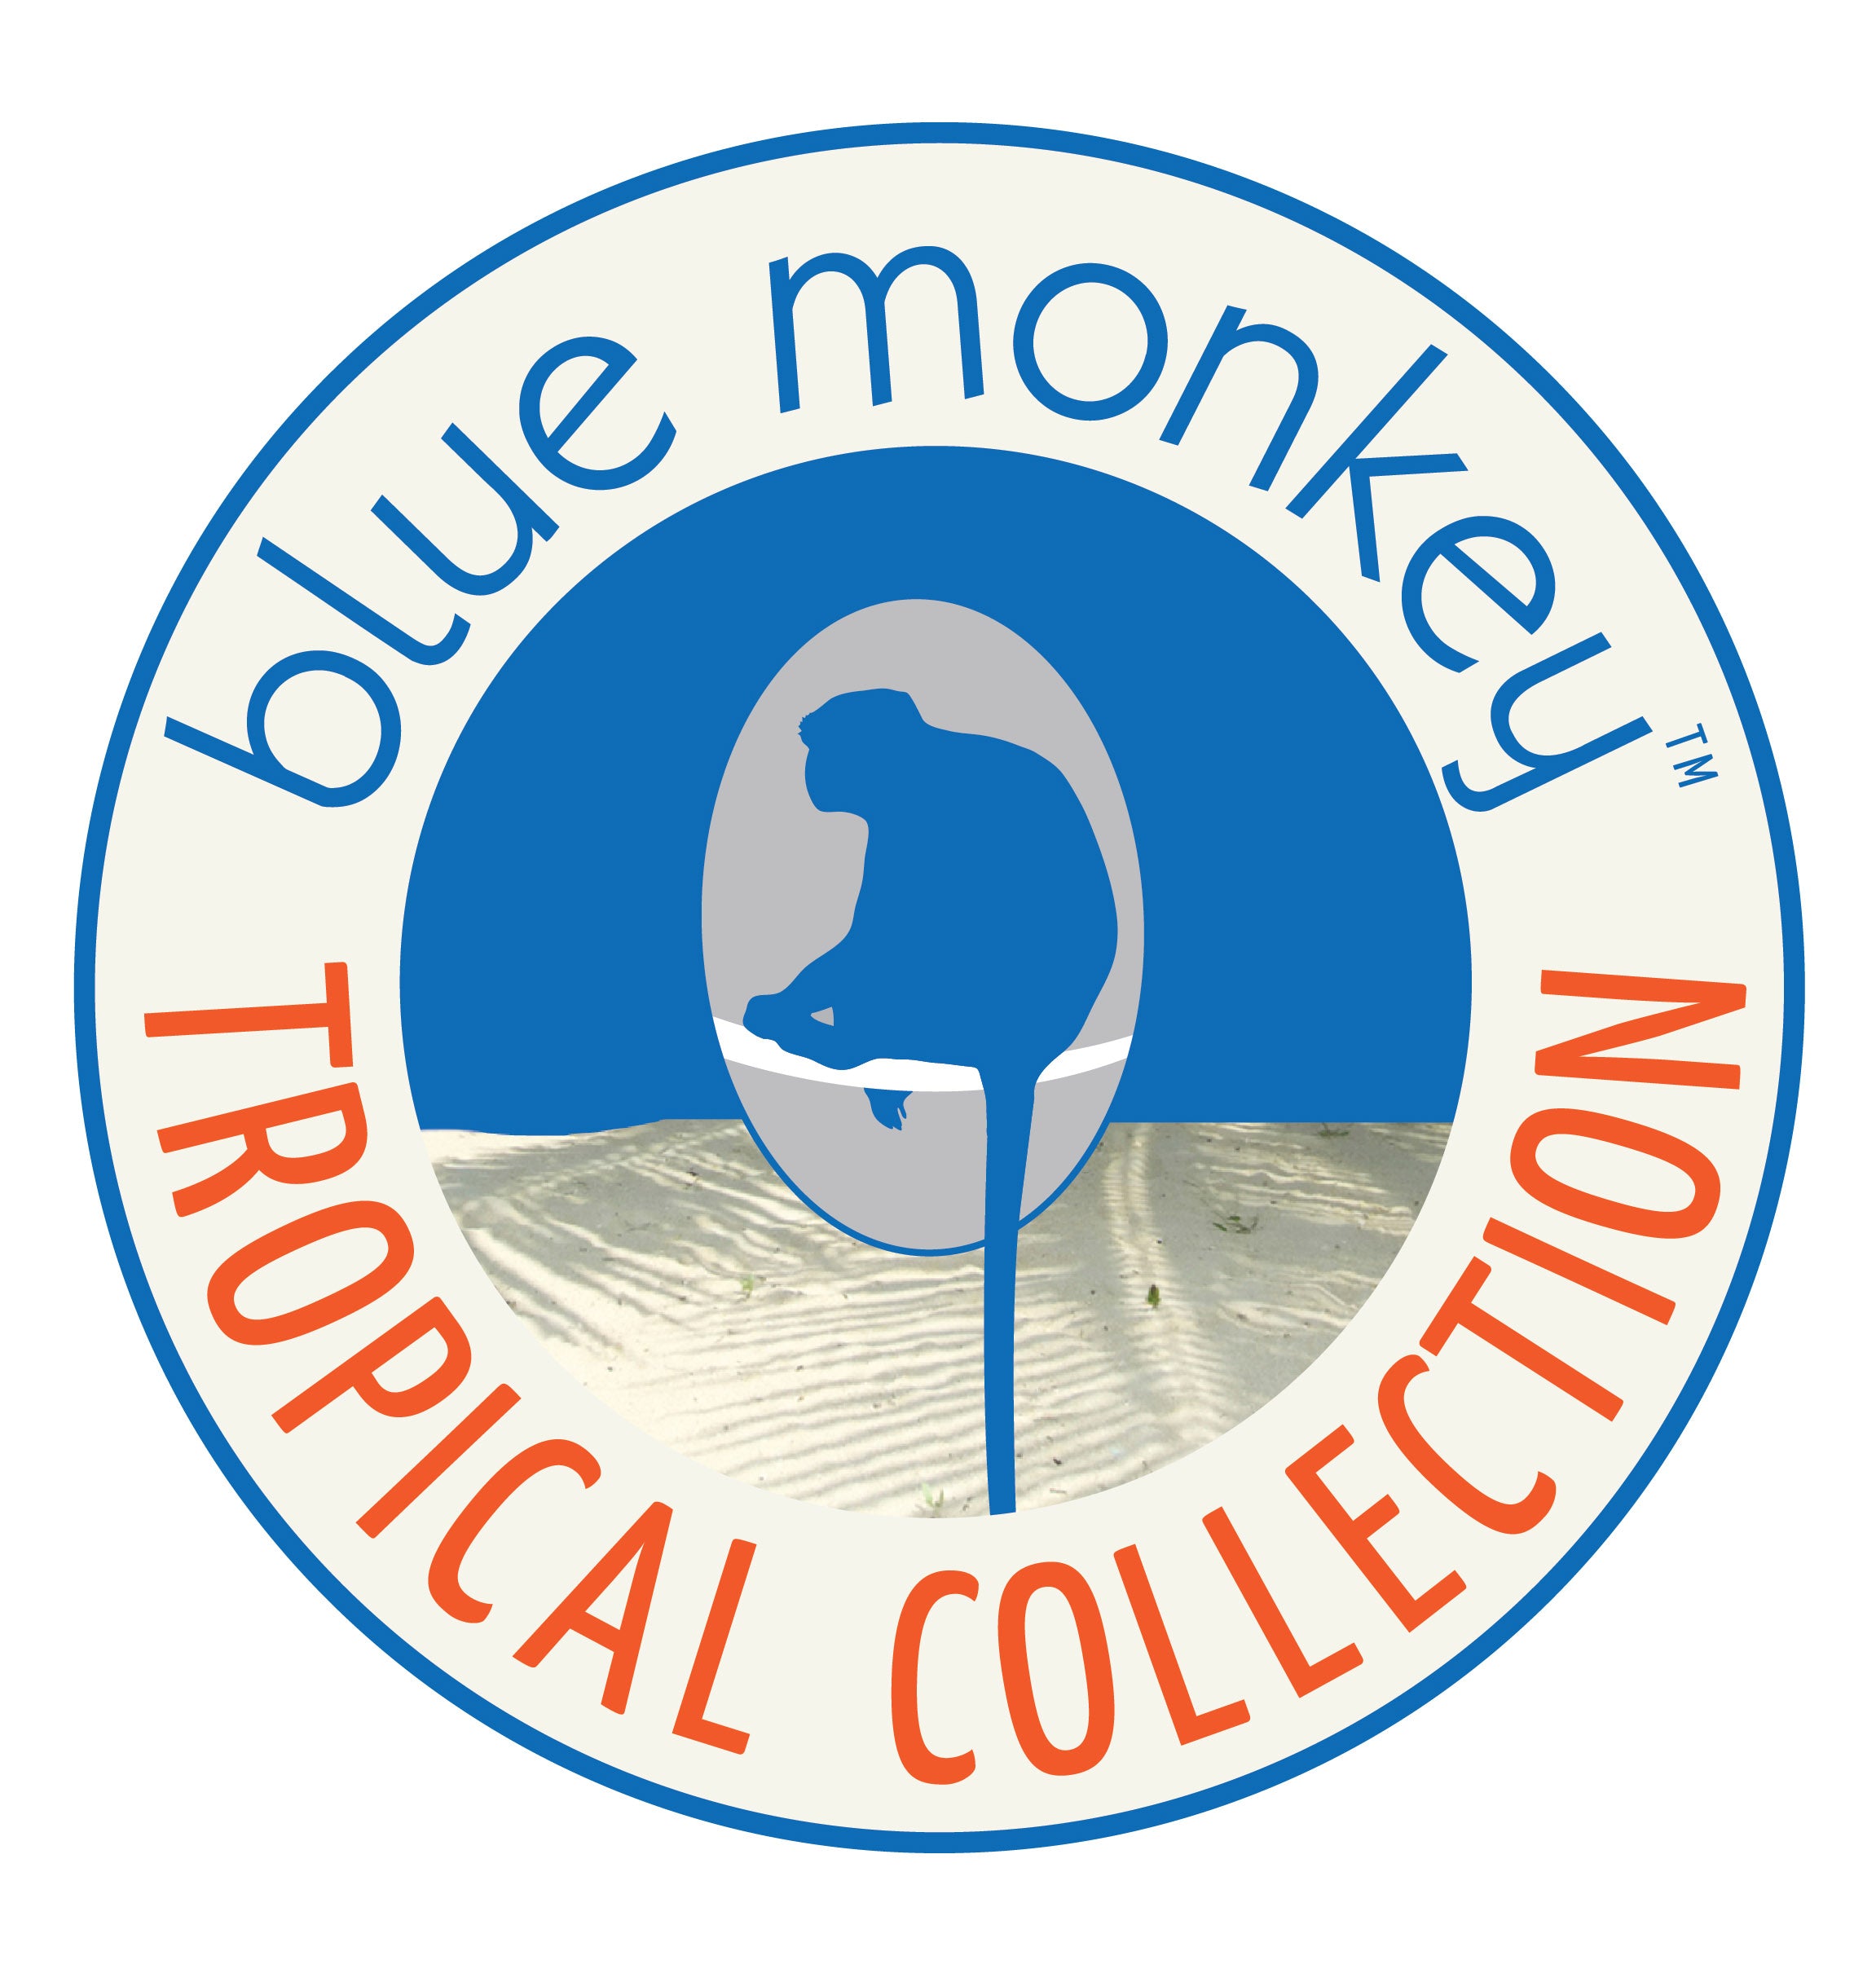 Buy Blue Orange Backpack Online – Urban Monkey®